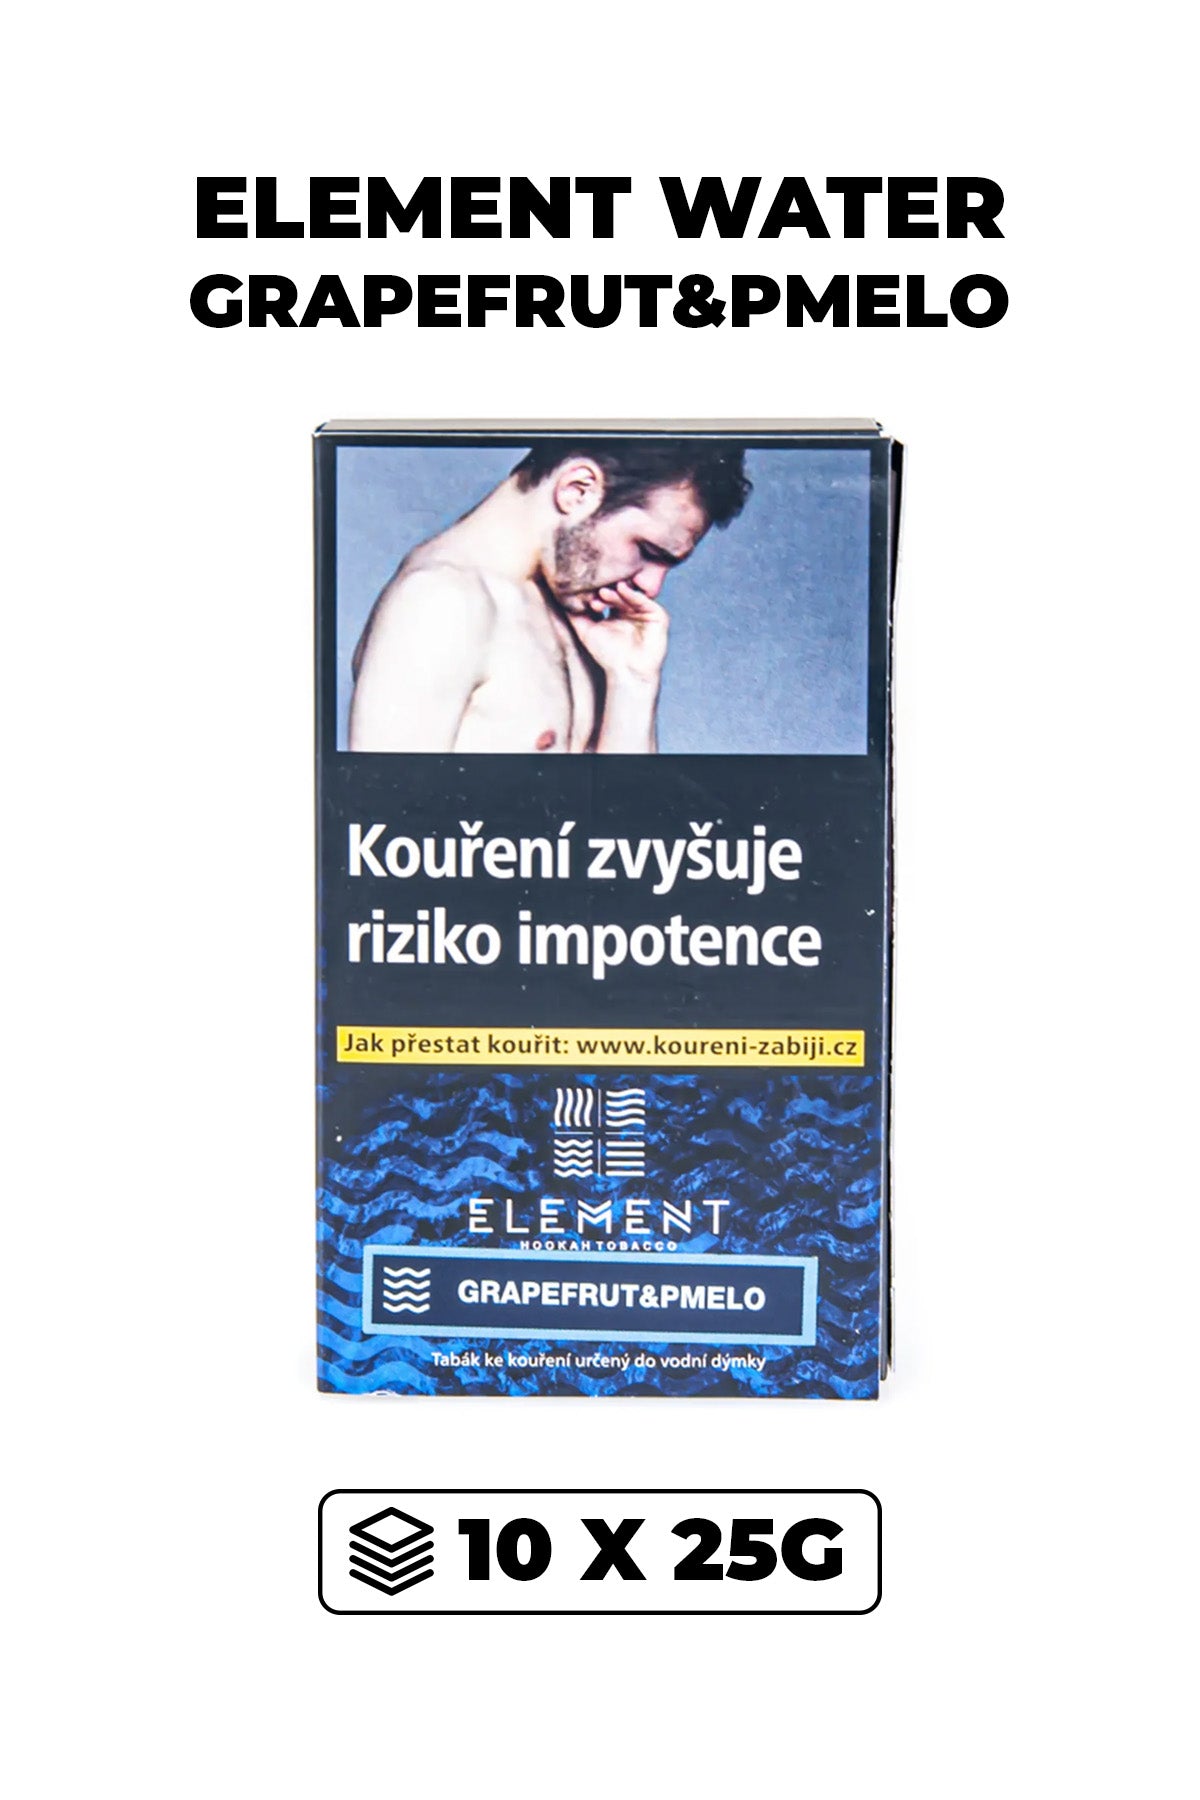 Tabák - Element Water 10x25g - Grapefrut&pmelo